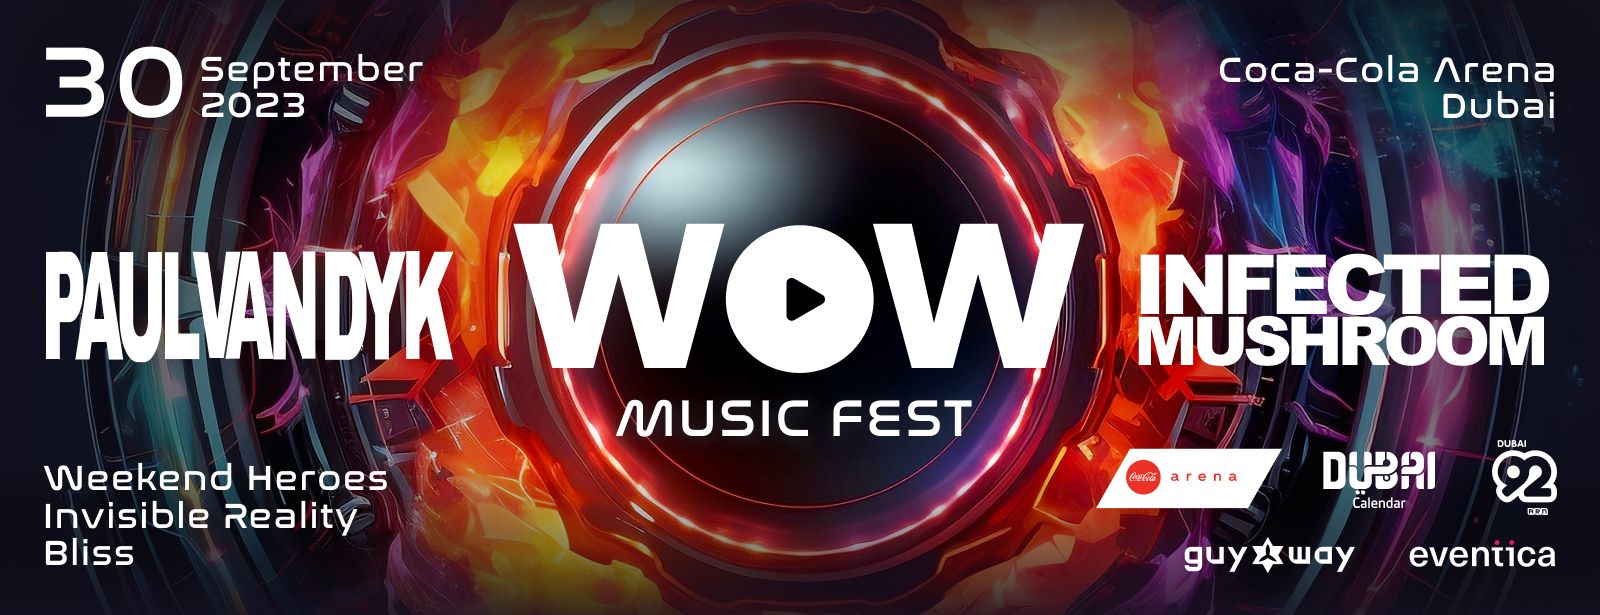 WOW Music Fest – Paul van Dyk and Infected Mushroom Live in Coca-Cola Arena, Dubai - Coming Soon in UAE